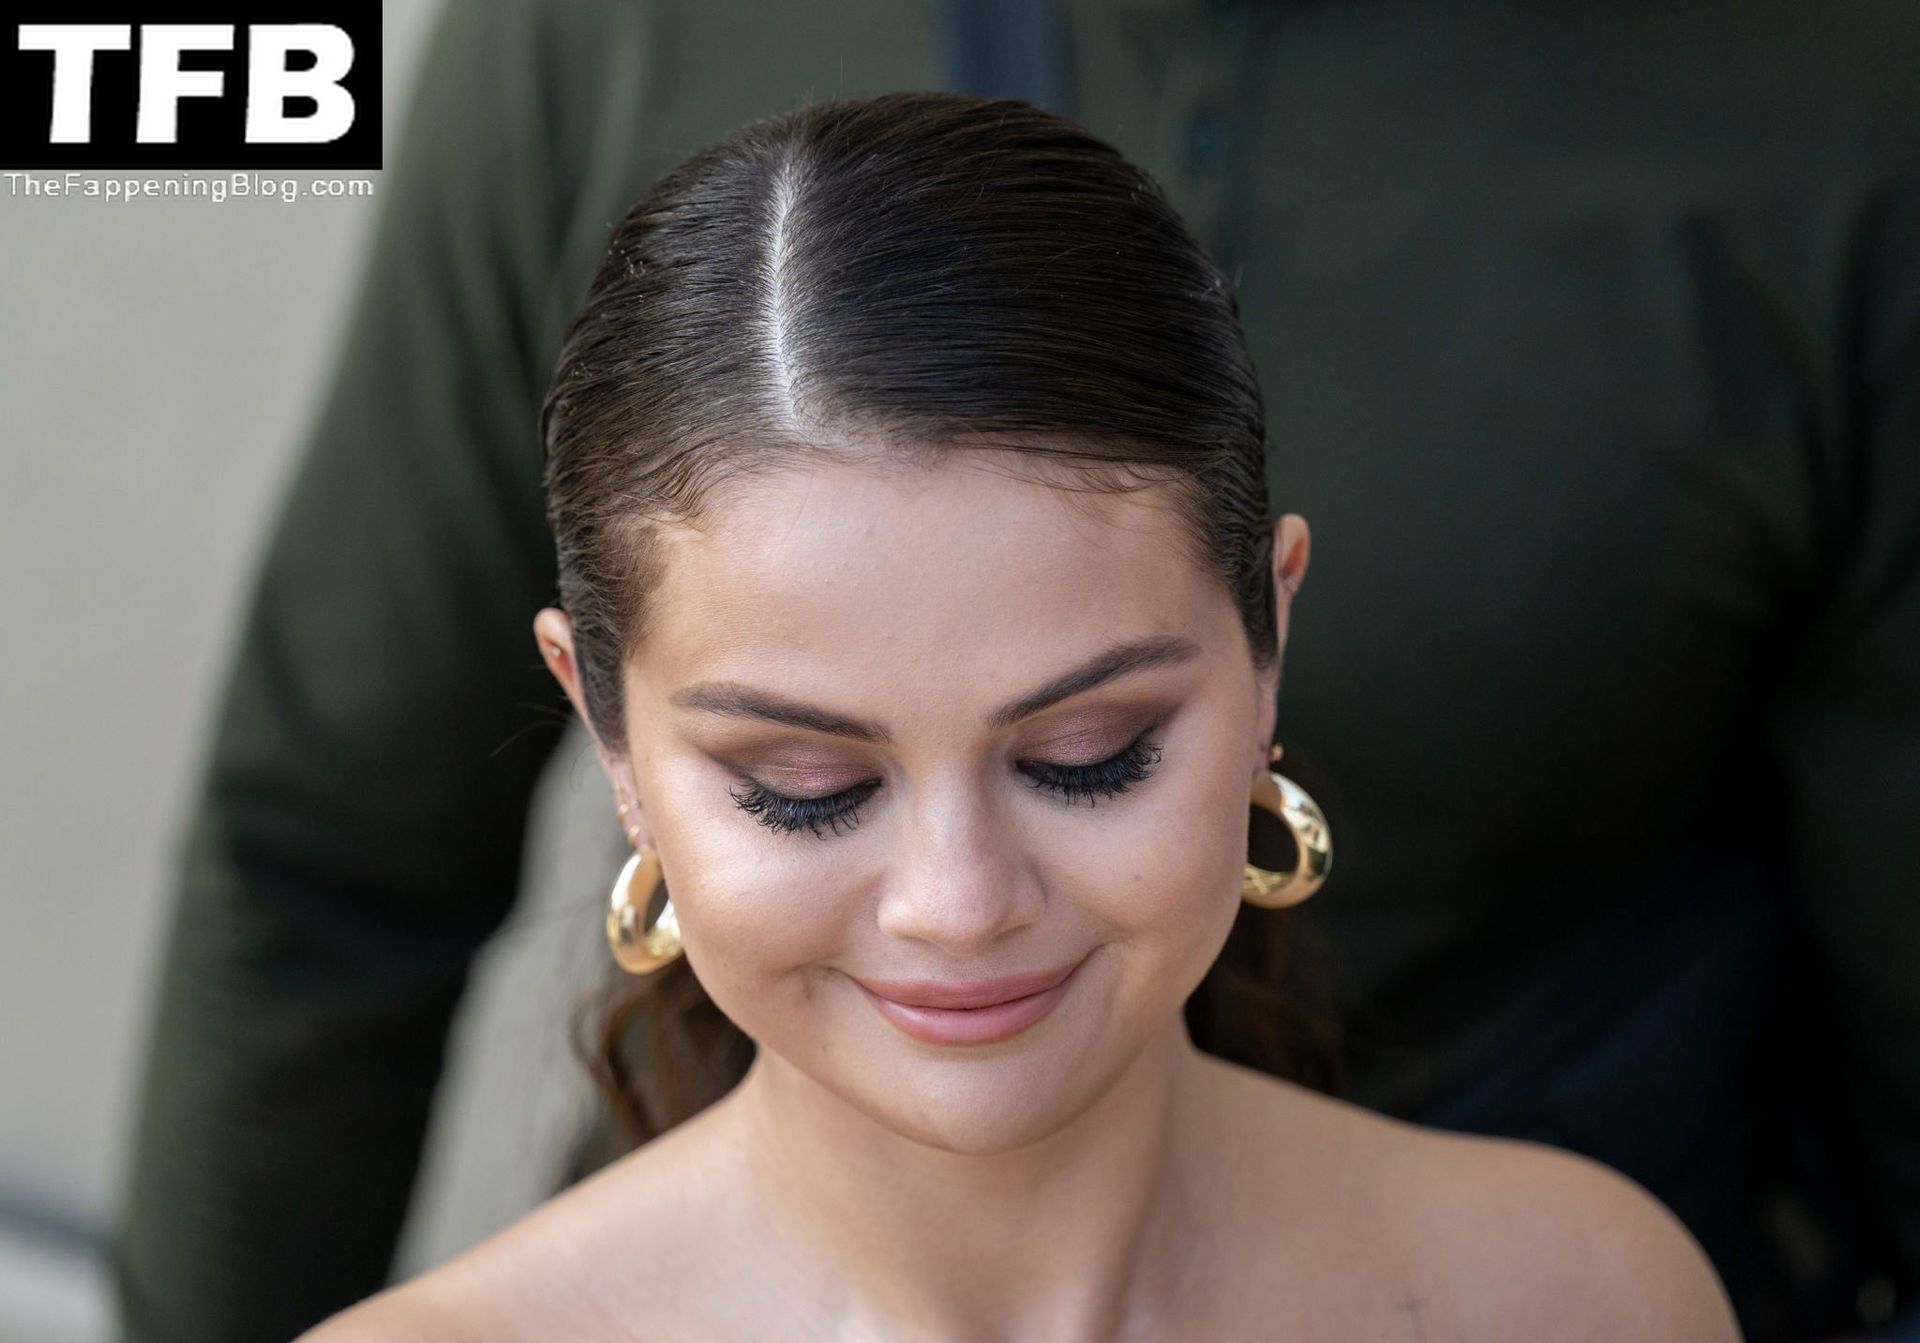 Selena-Gomez-The-Fappening-Blog-19.jpg